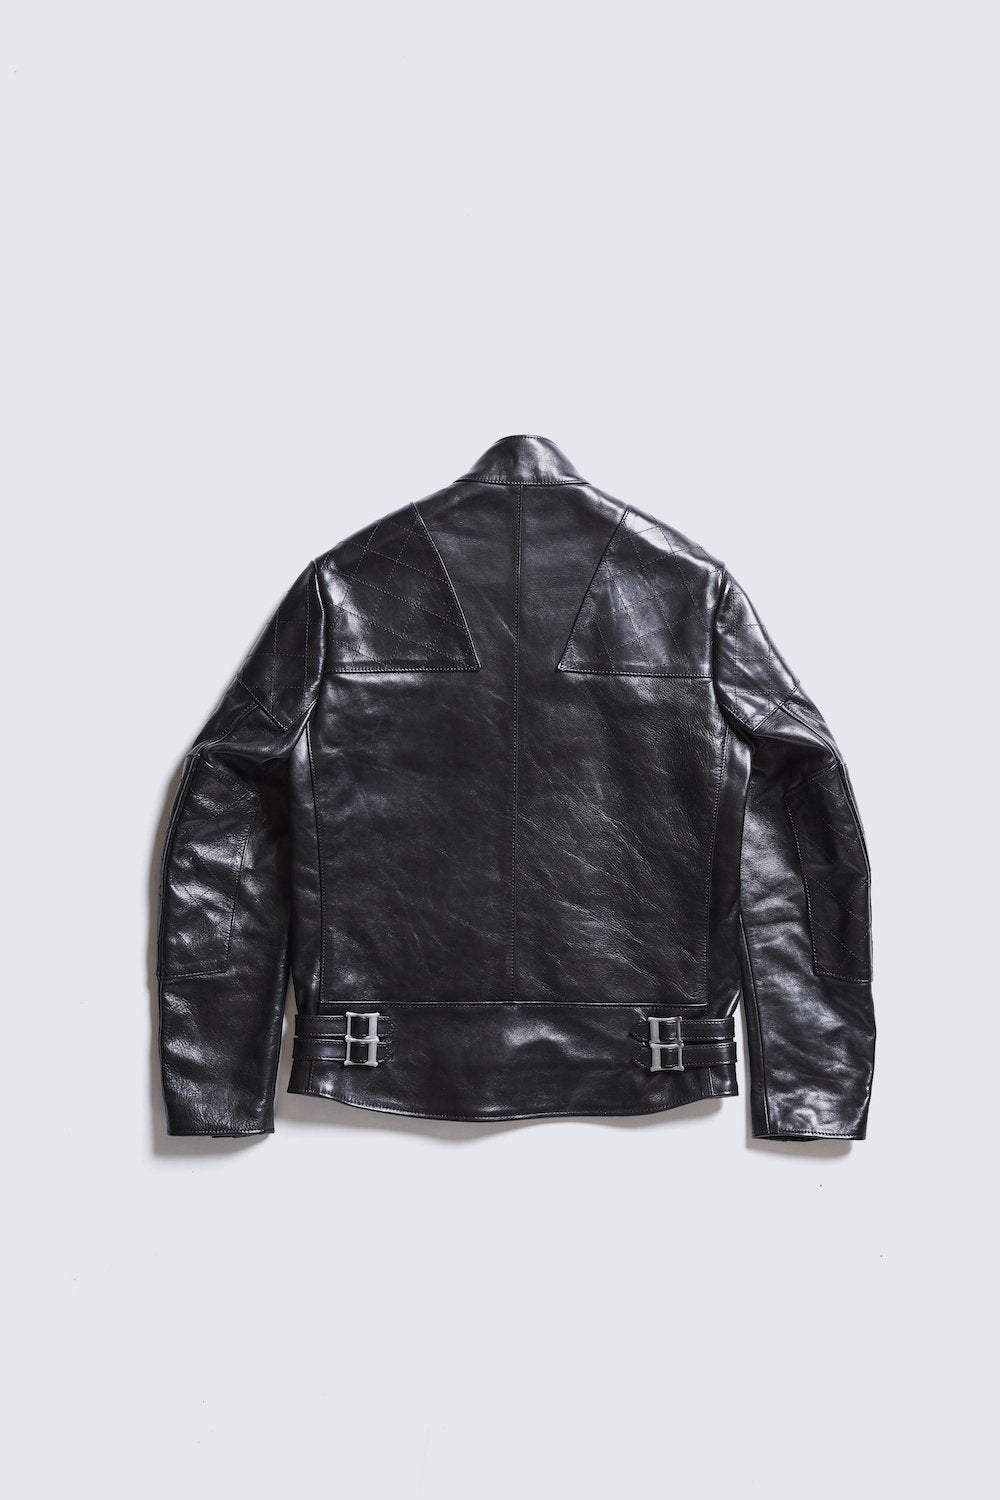 Addict Clothes-Leather-Ad-04 Resistance Jacket (Horse) - Black Riot HK